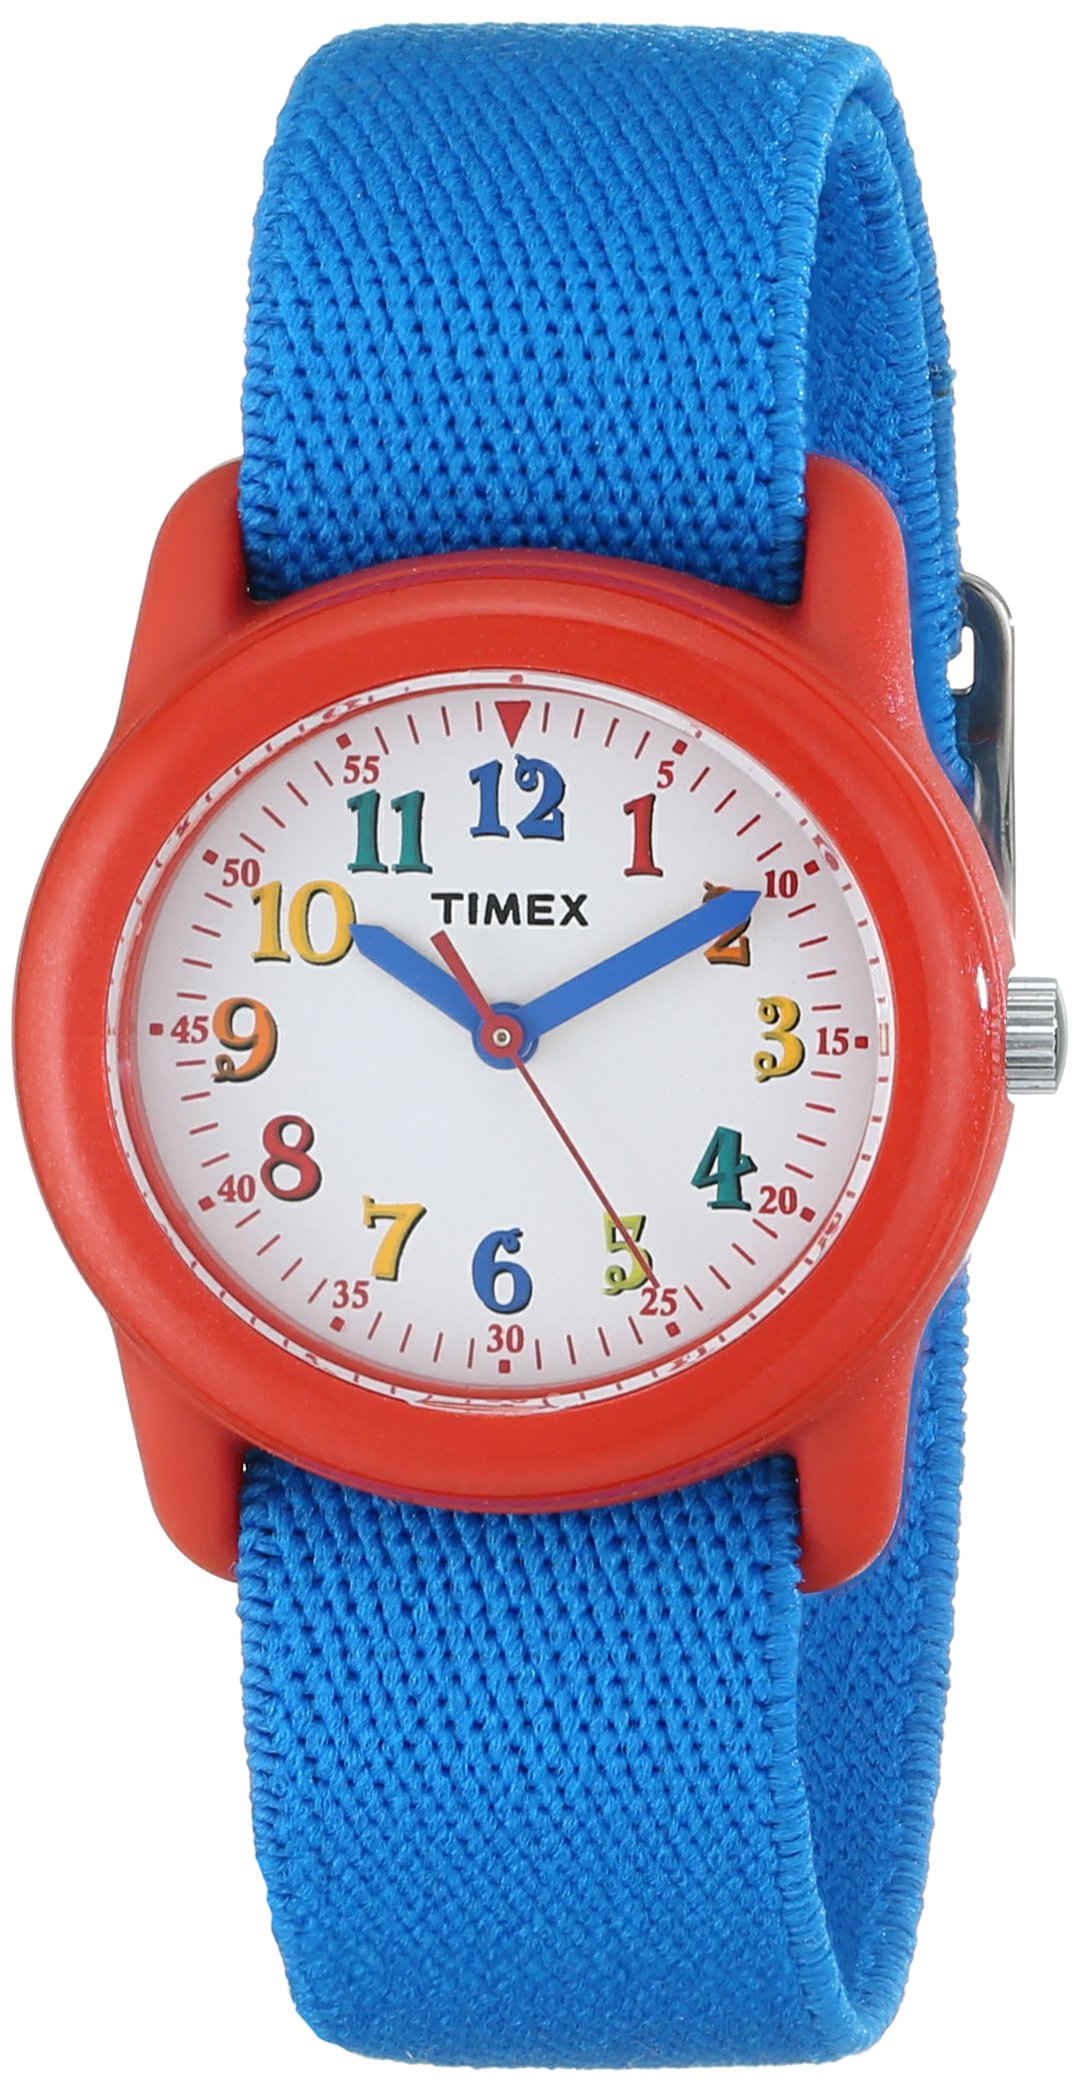 Timex Kids Time Analog Elastic Fabric Strap Watch